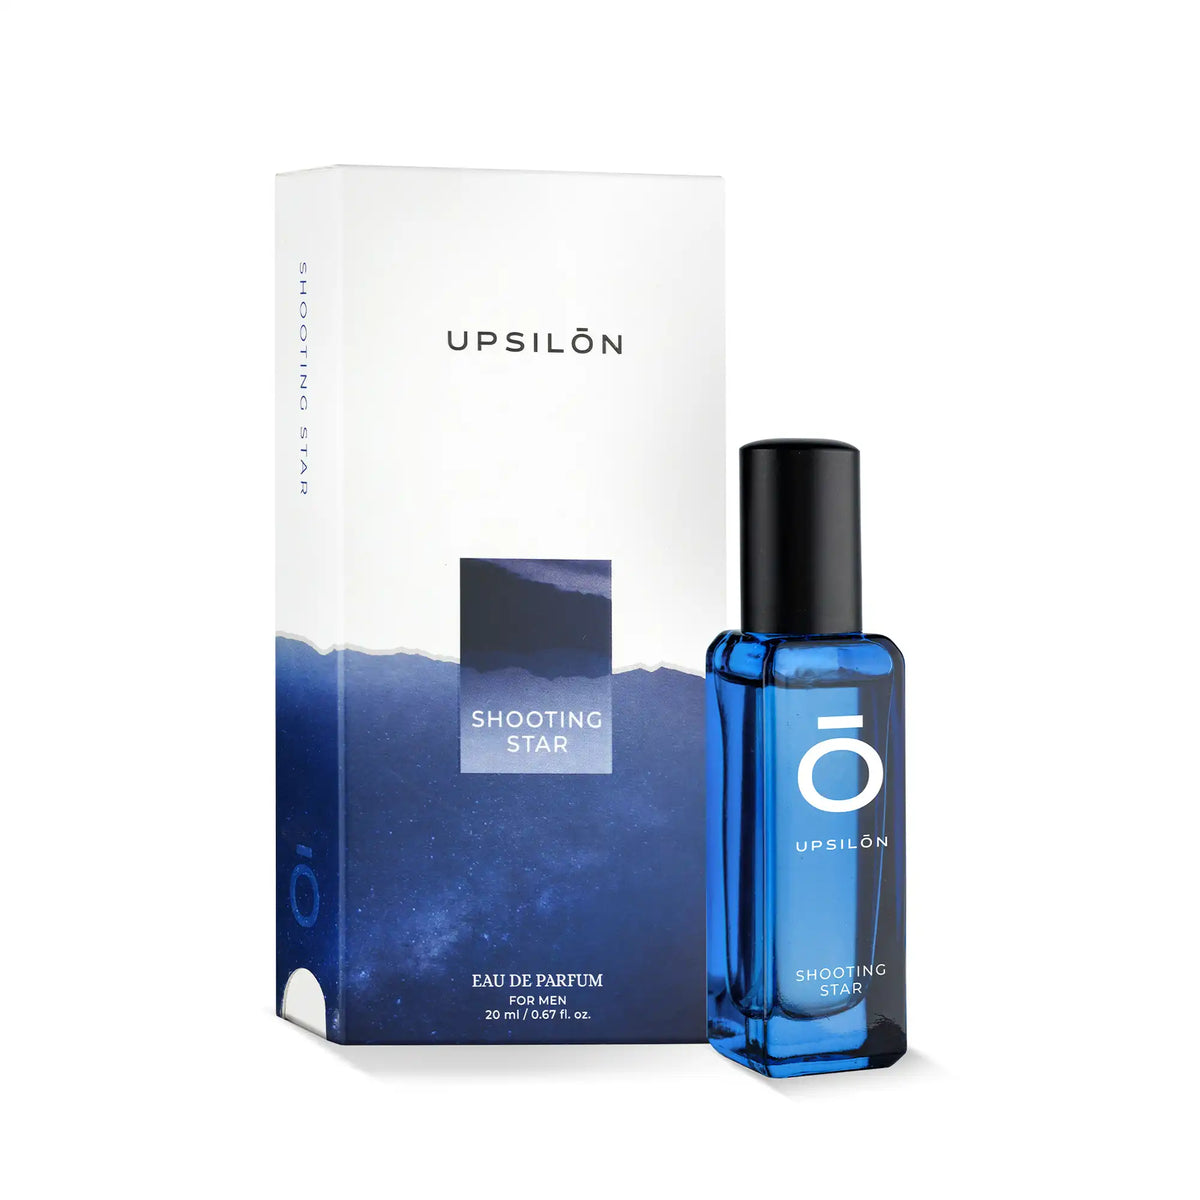 Upsilon Shooting Star Eau de Parfum for Men - 20ml, a premium long-lasting fresh and powerful fragrance spray for men. Travel-friendly luxury parfum scent